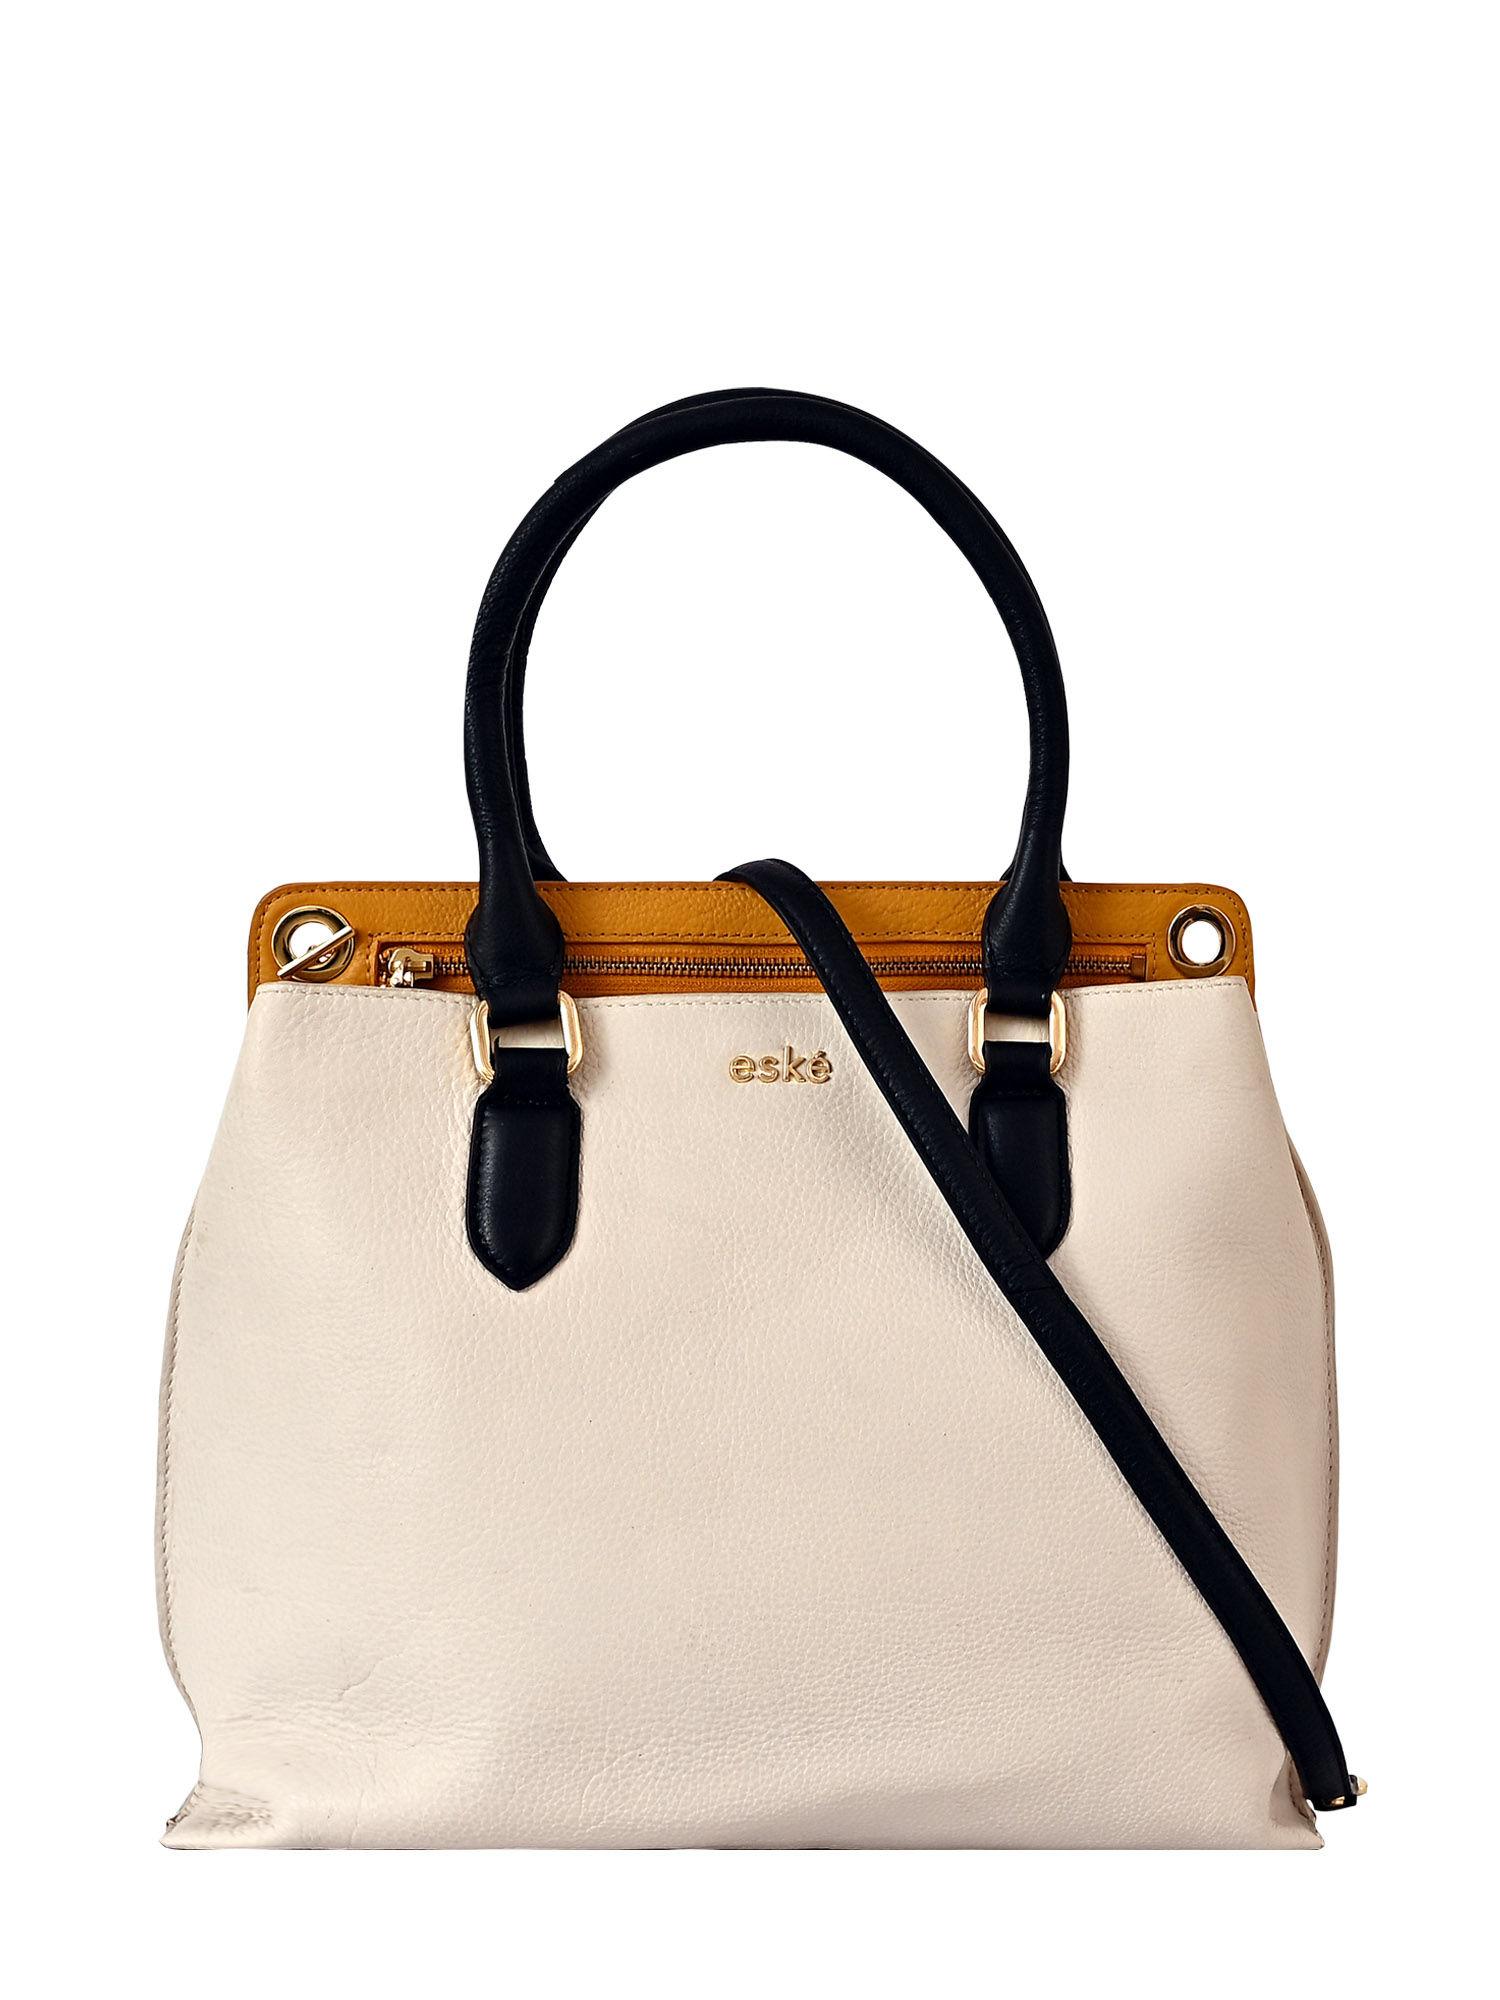 fonda genuine leather handbag spacious compartments